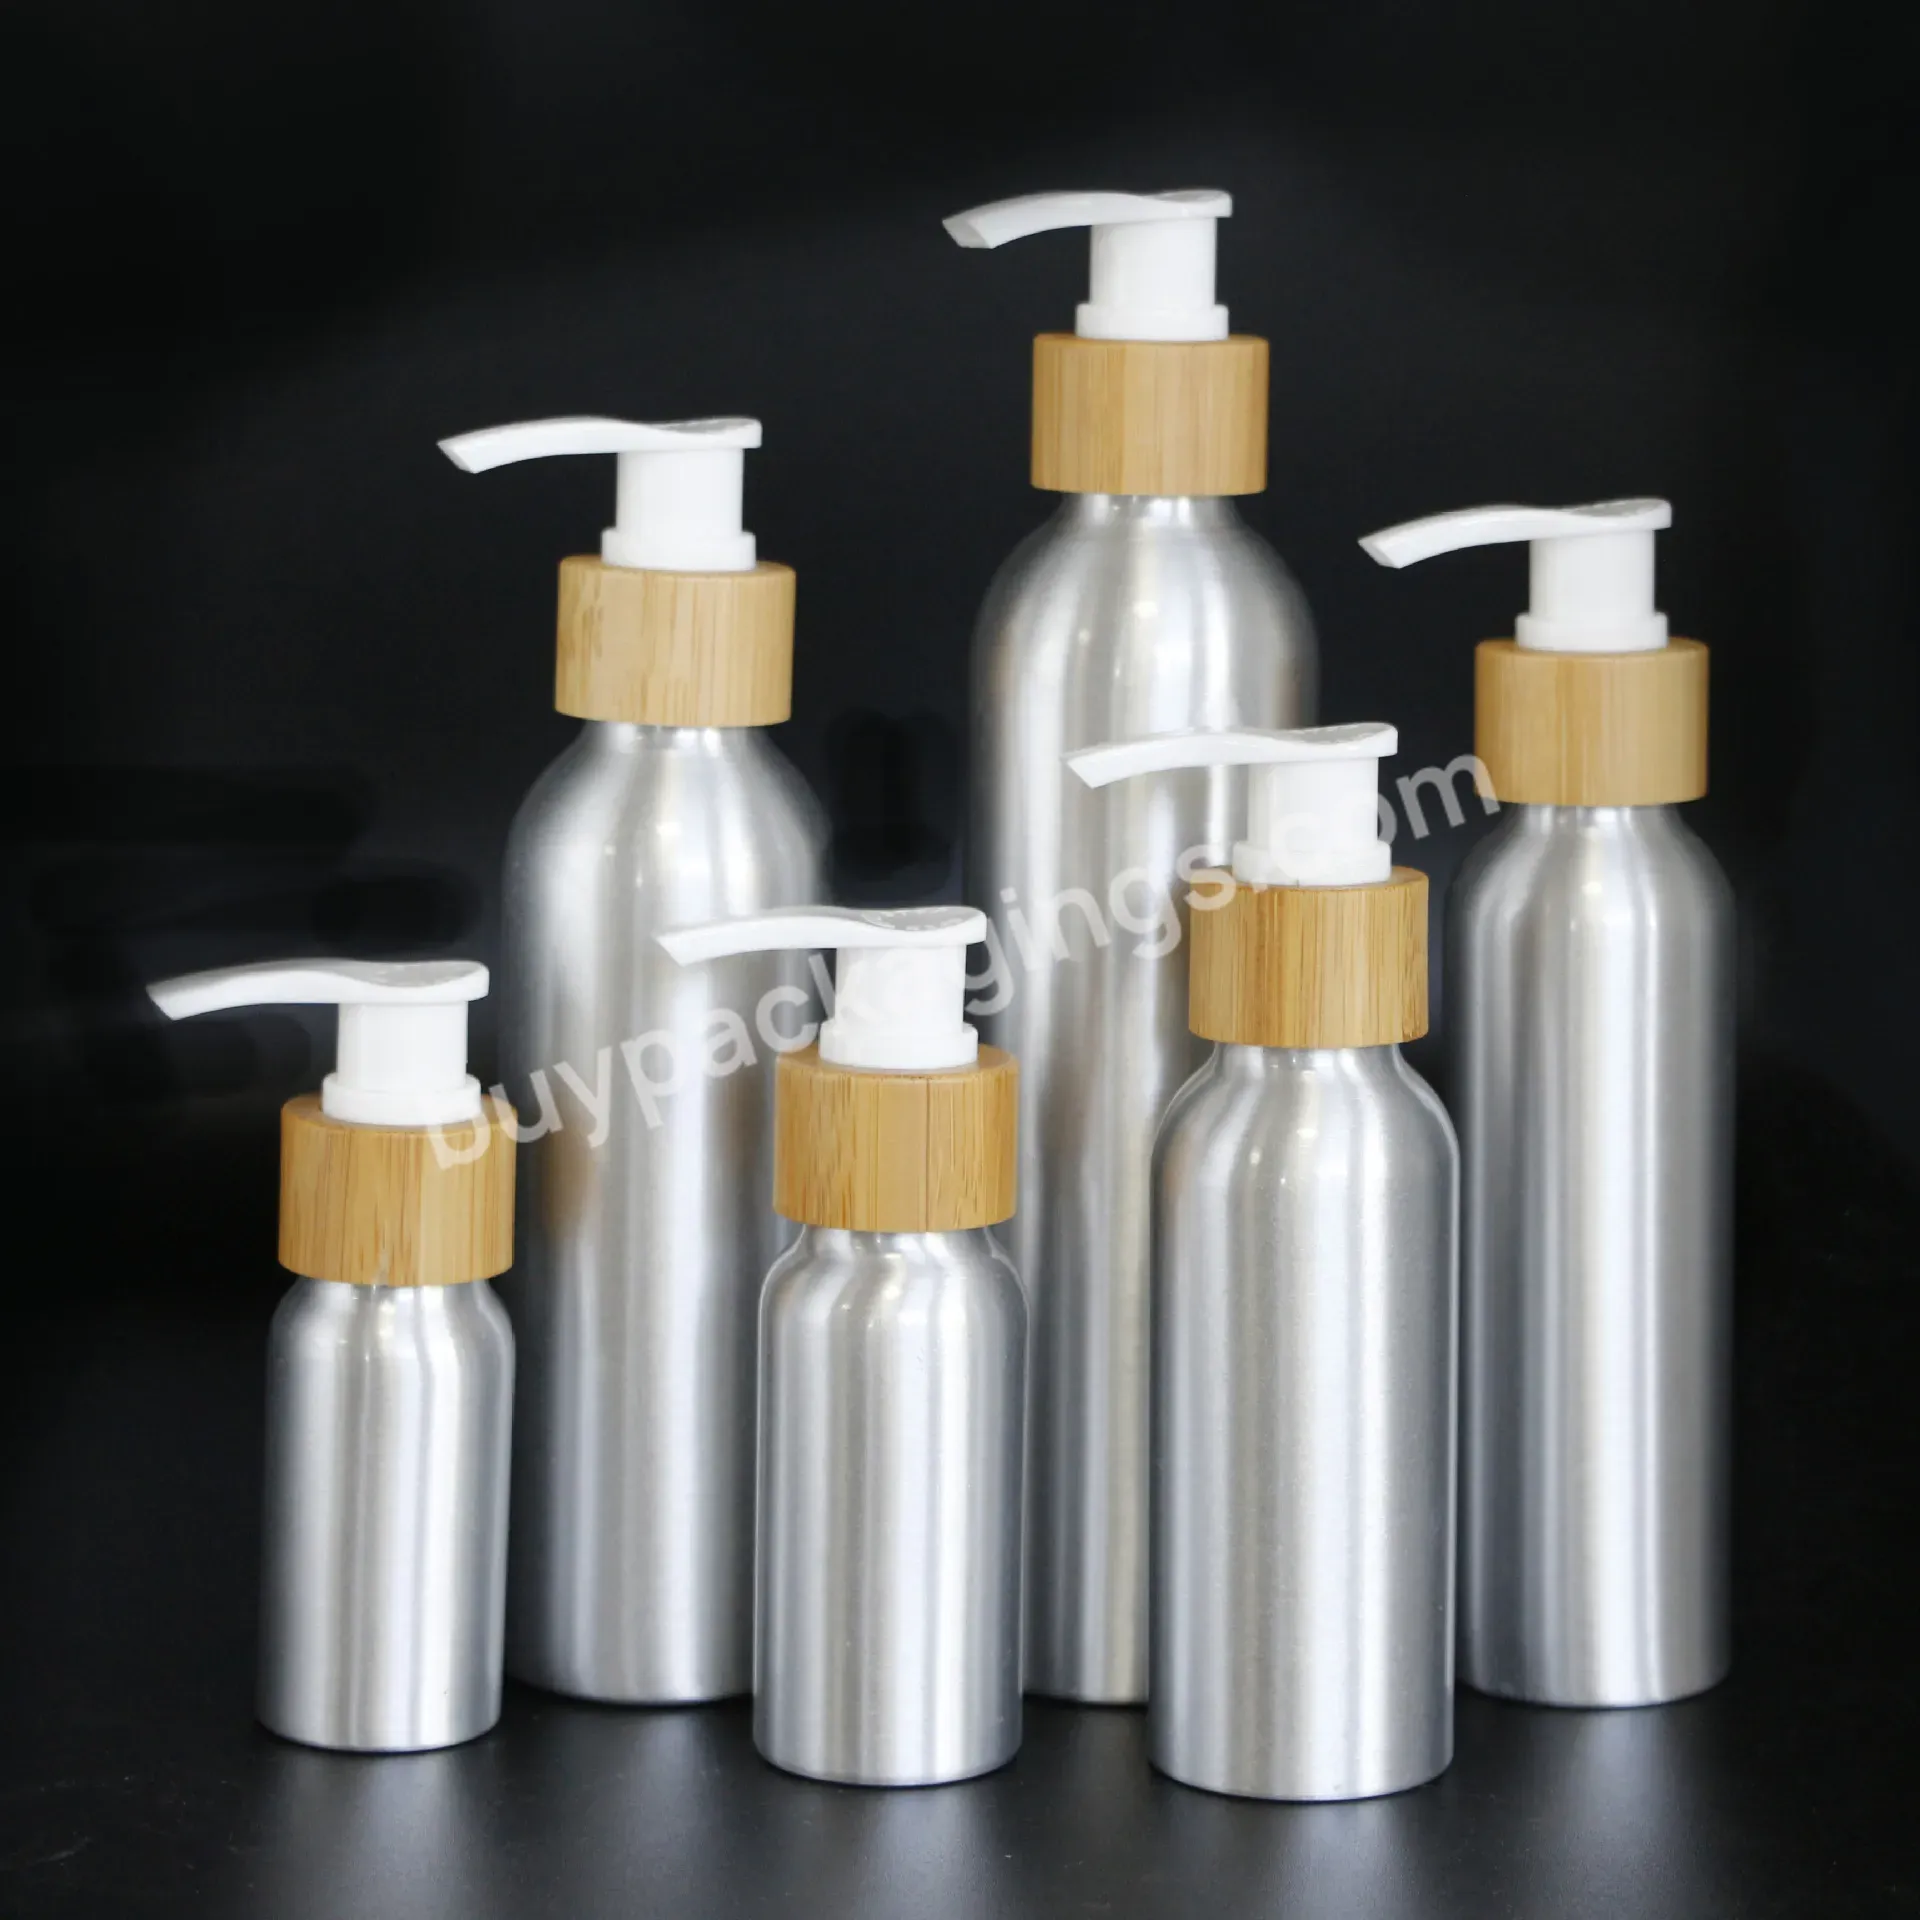 30ml-500ml Aluminum Bottle Aluminum Lotion Bottle For Hair Shampoo Hand Sanitizer Safe Gel Cosmetic Bottle With Bamboo Pump Cap - Buy Aluminum Bottle With Pump,Aluminum Foam Pump Bottle 500ml,Aluminum Bottle Pump.